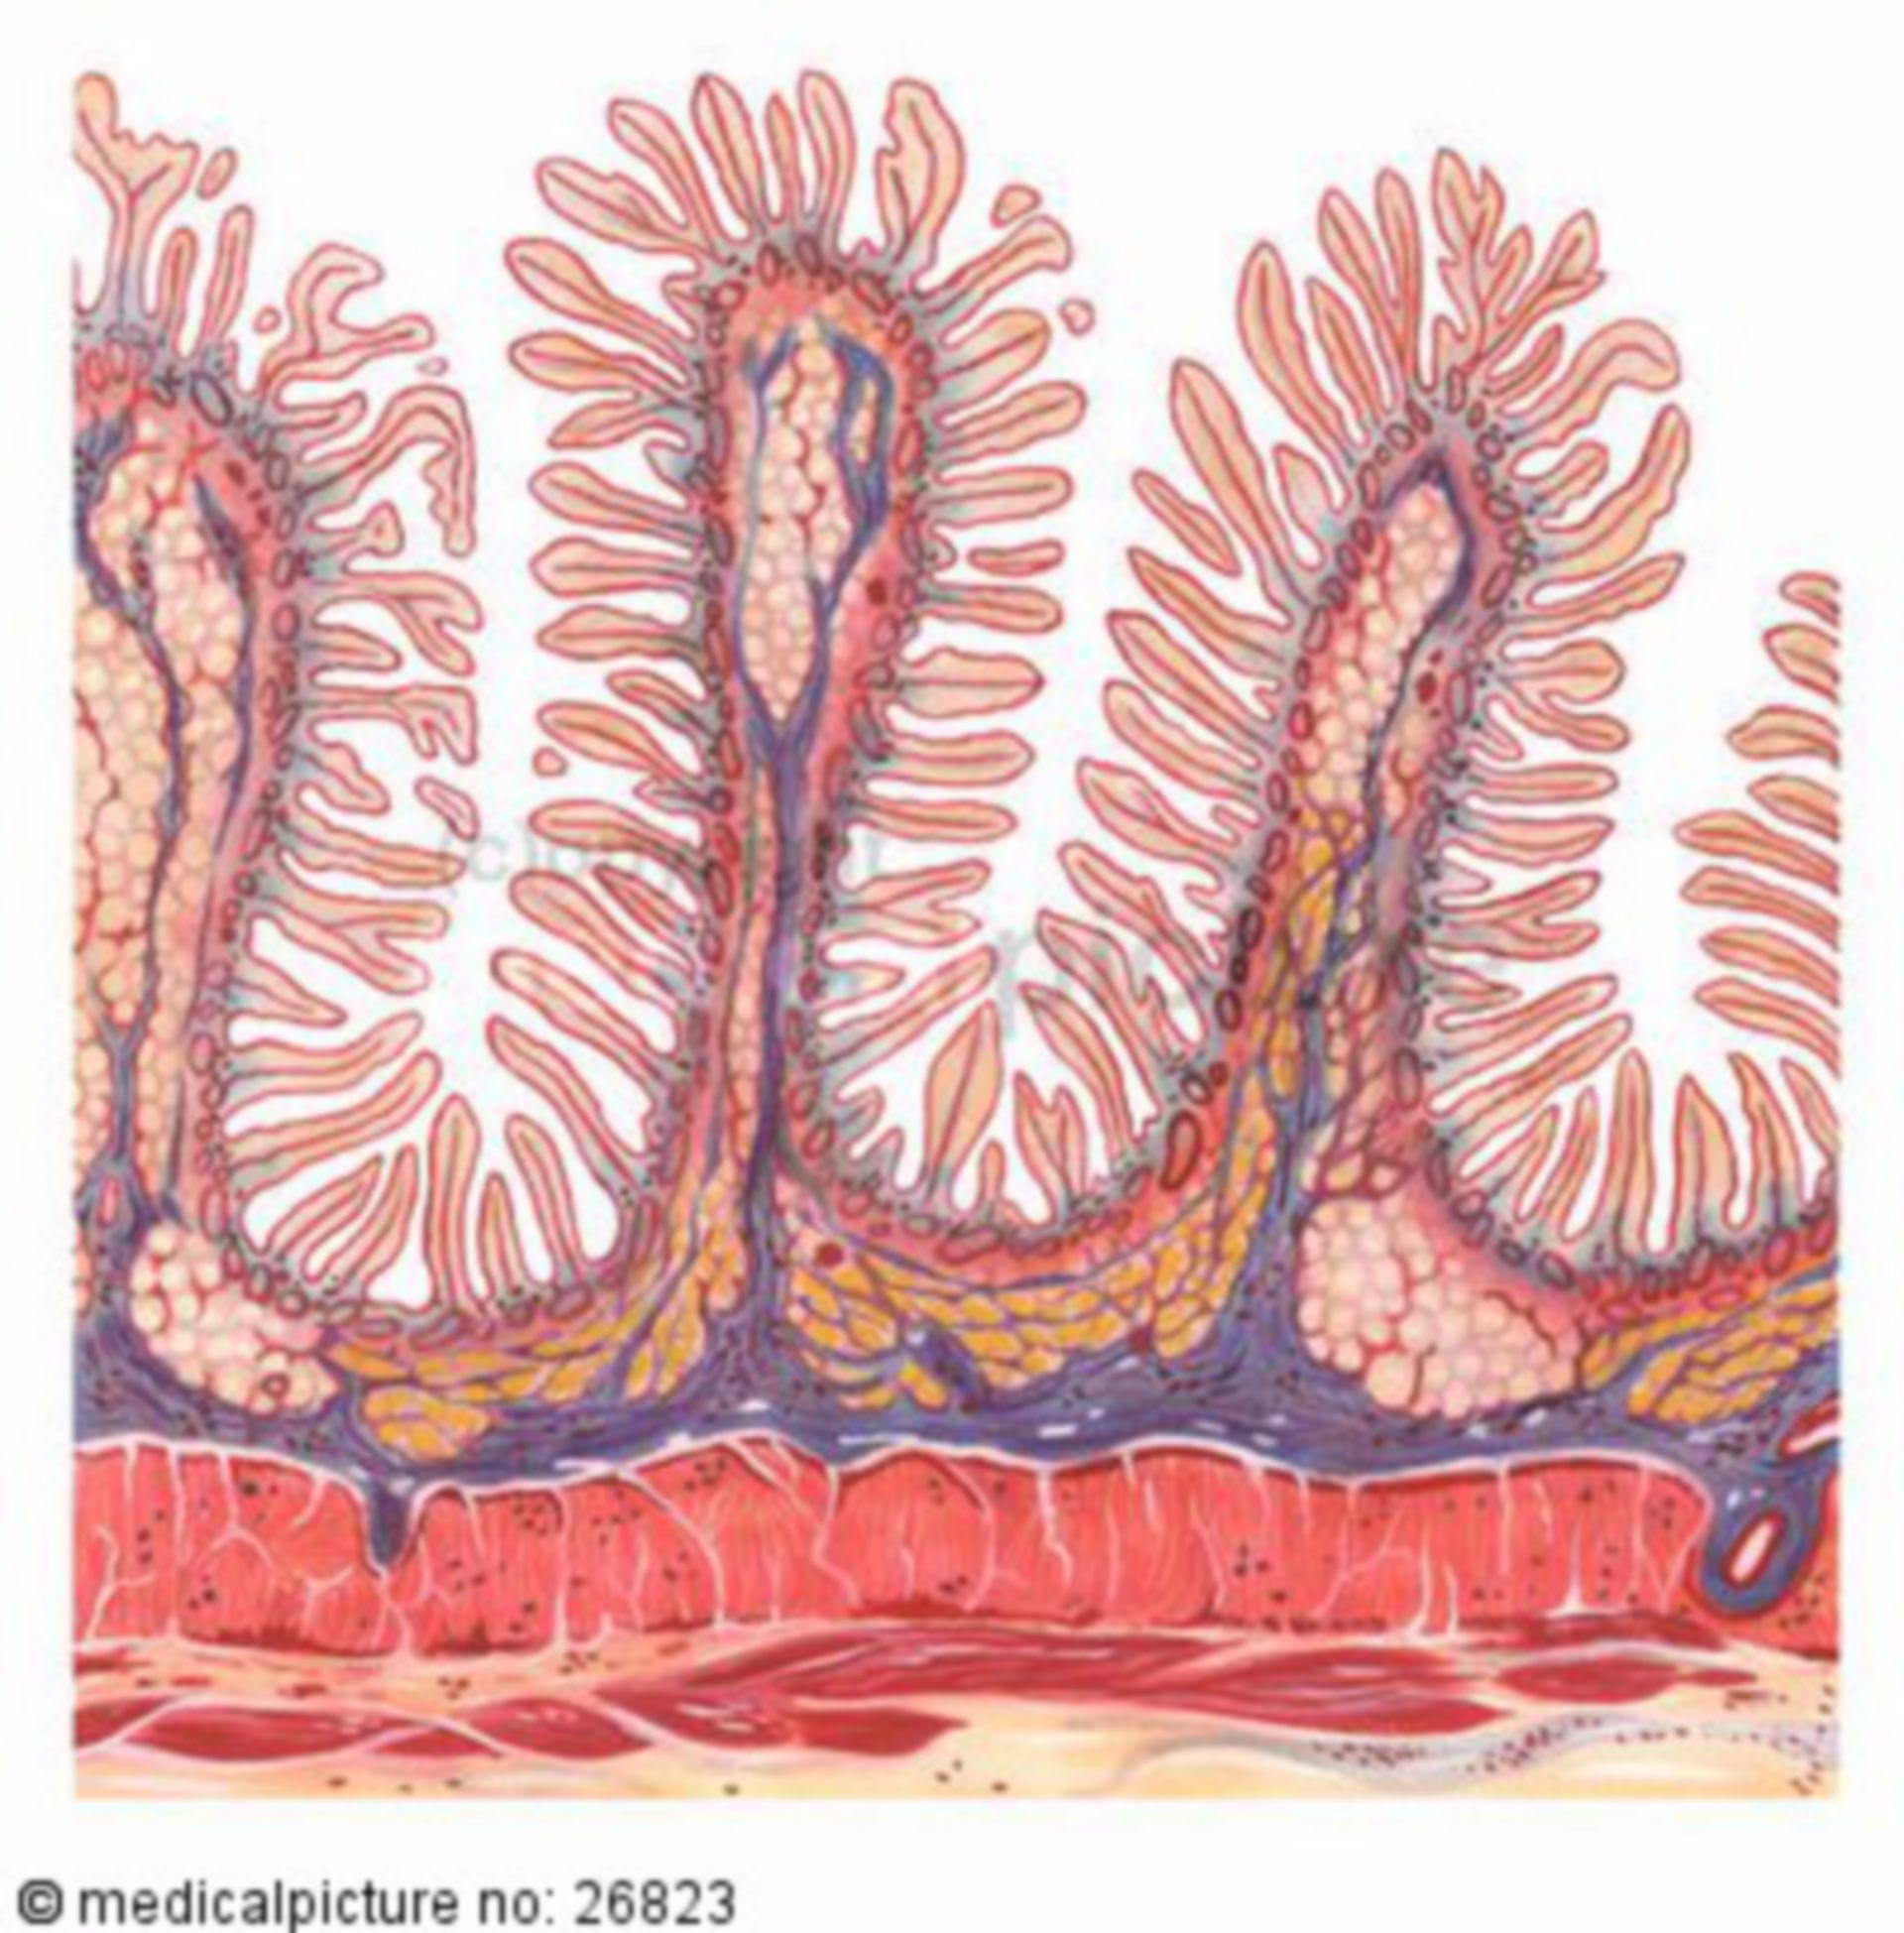 villi small intestine